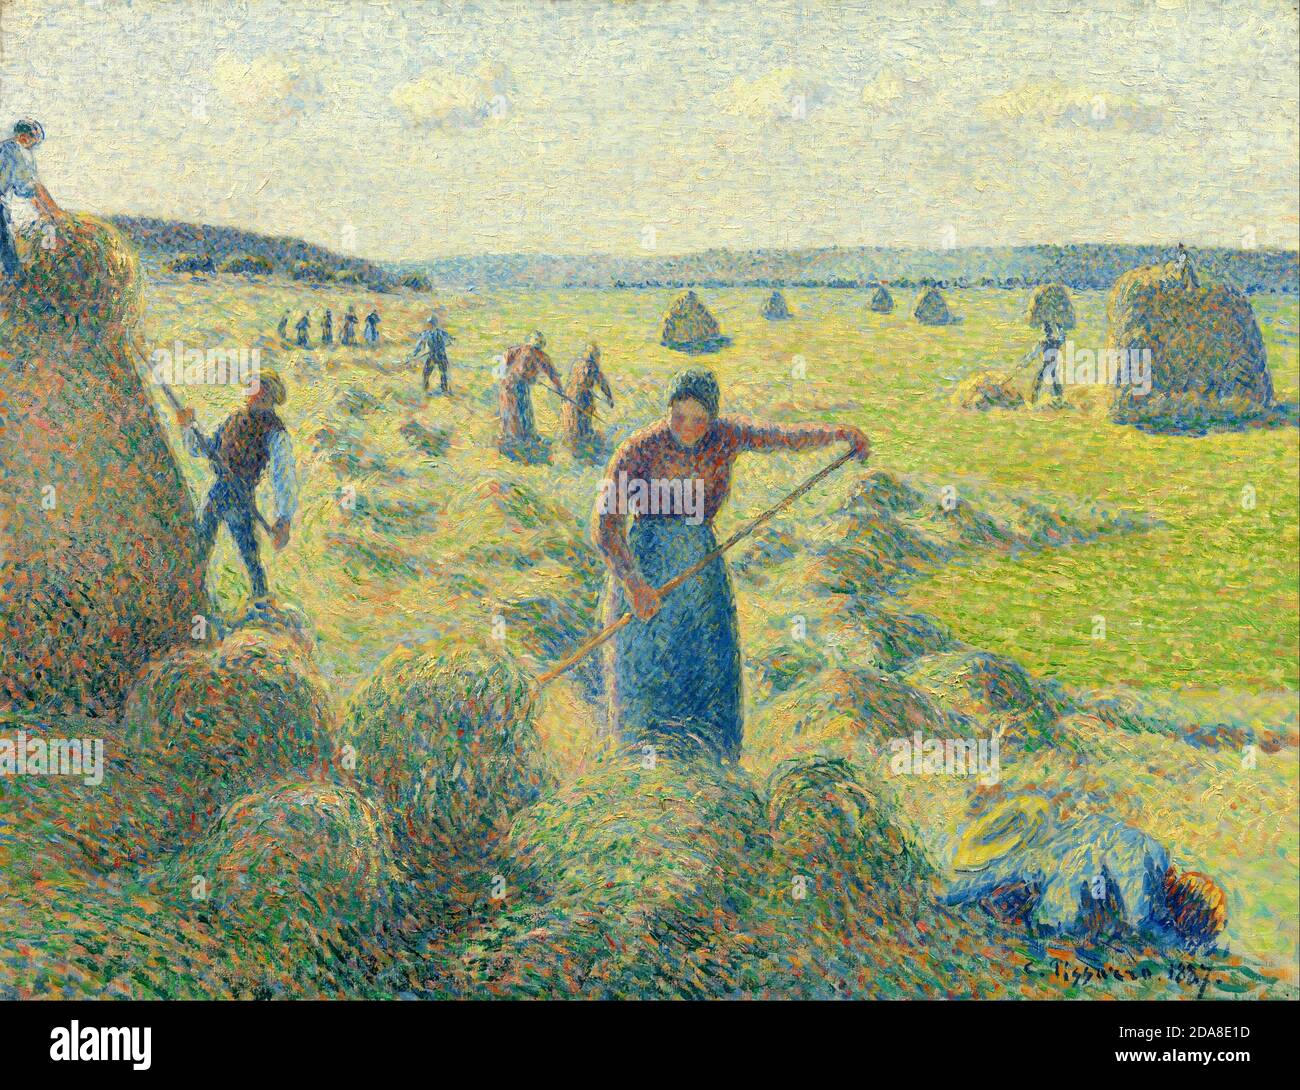 La Récole des Foins, Eragny, 1887, The Hay Harvest, Éragny von Camille Pissarro Stockfoto